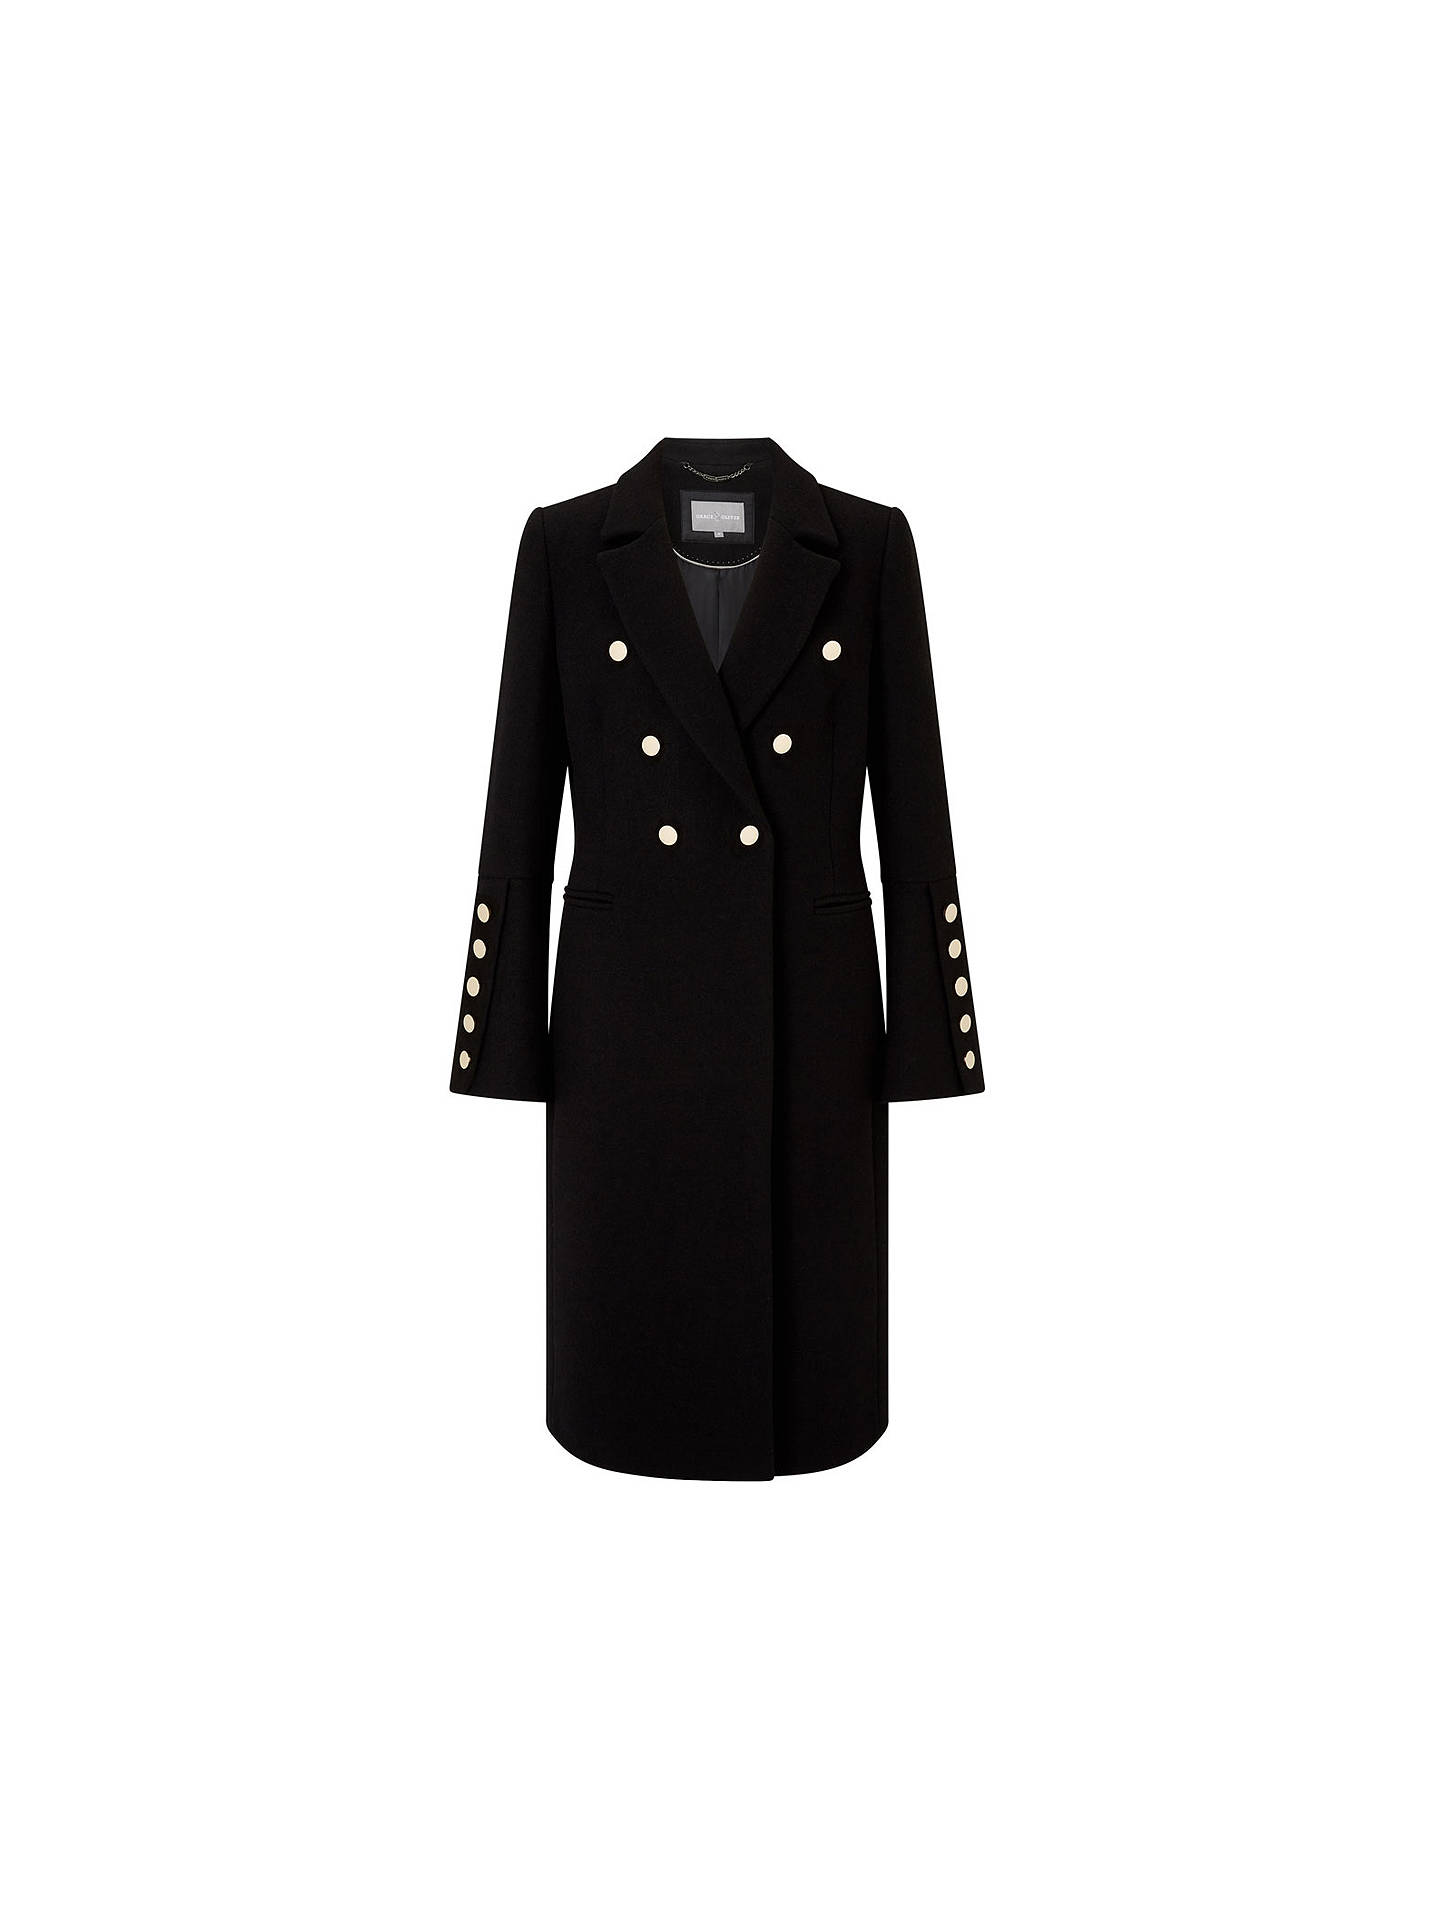 Grace & Oliver Layla Tailored Coat, Black at John Lewis & Partners